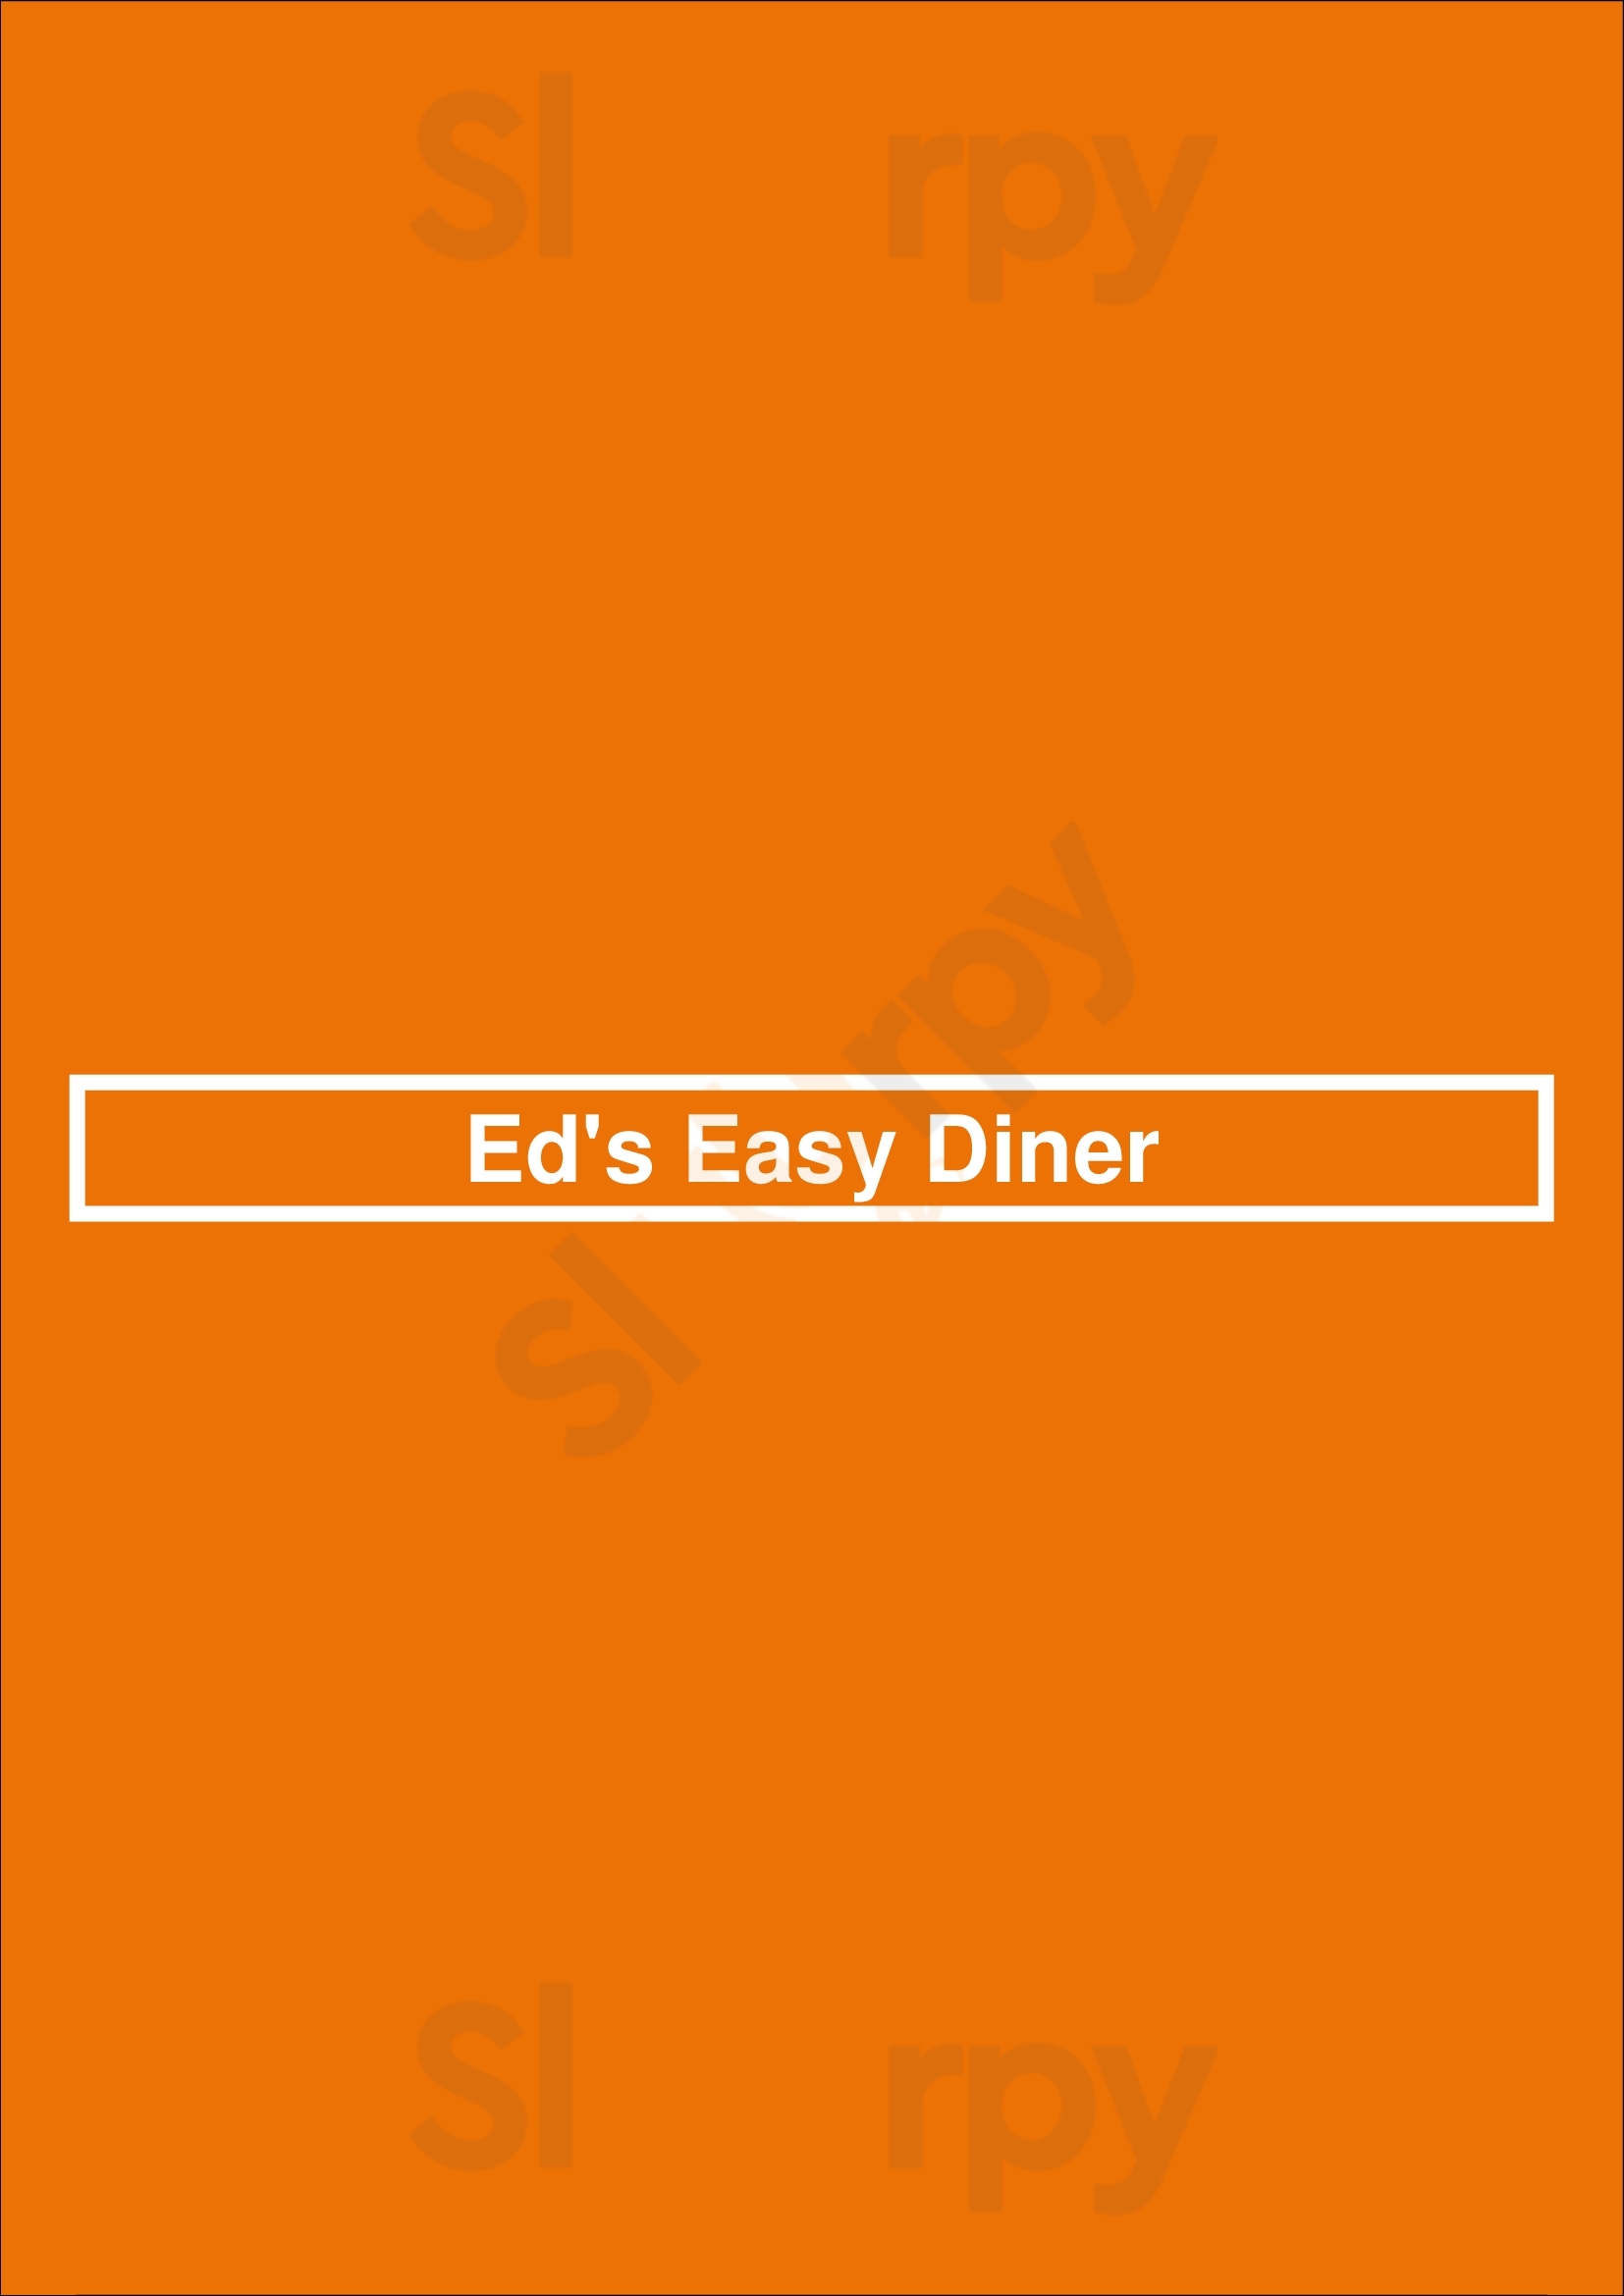 Ed's Easy Diner Birmingham Menu - 1